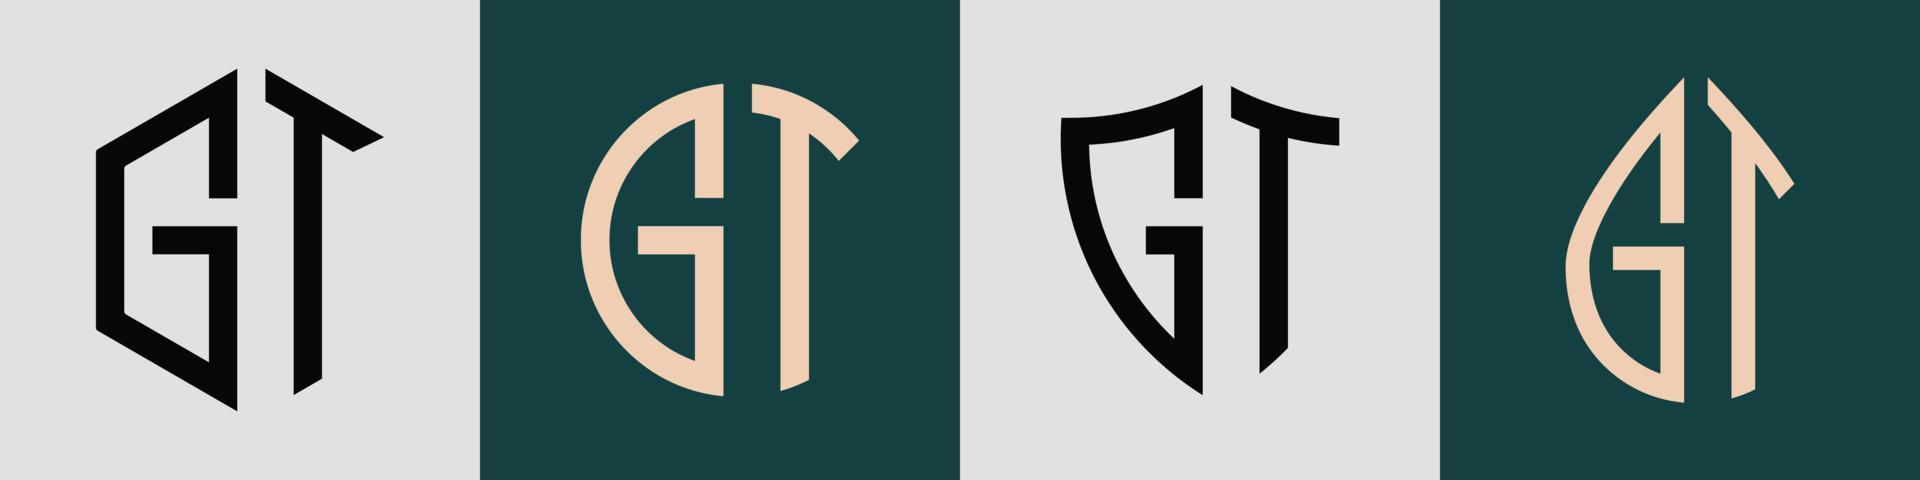 Creative simple Initial Letters GT Logo Designs Bundle. vector